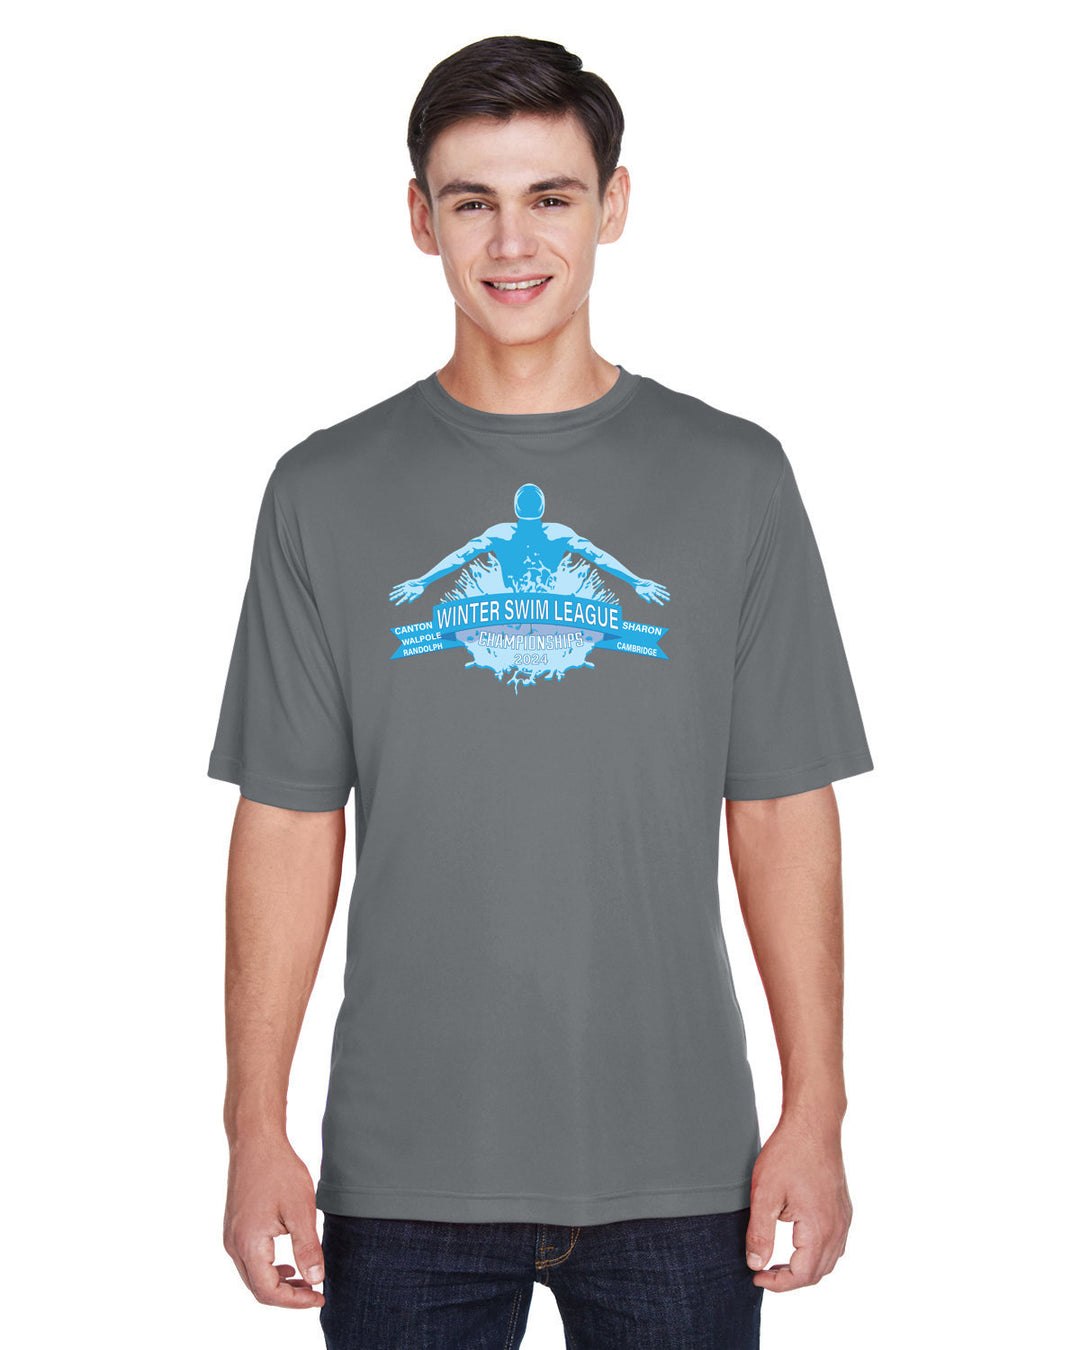 Winter Swim League Championship- Men's Performance T-Shirt (TT11)